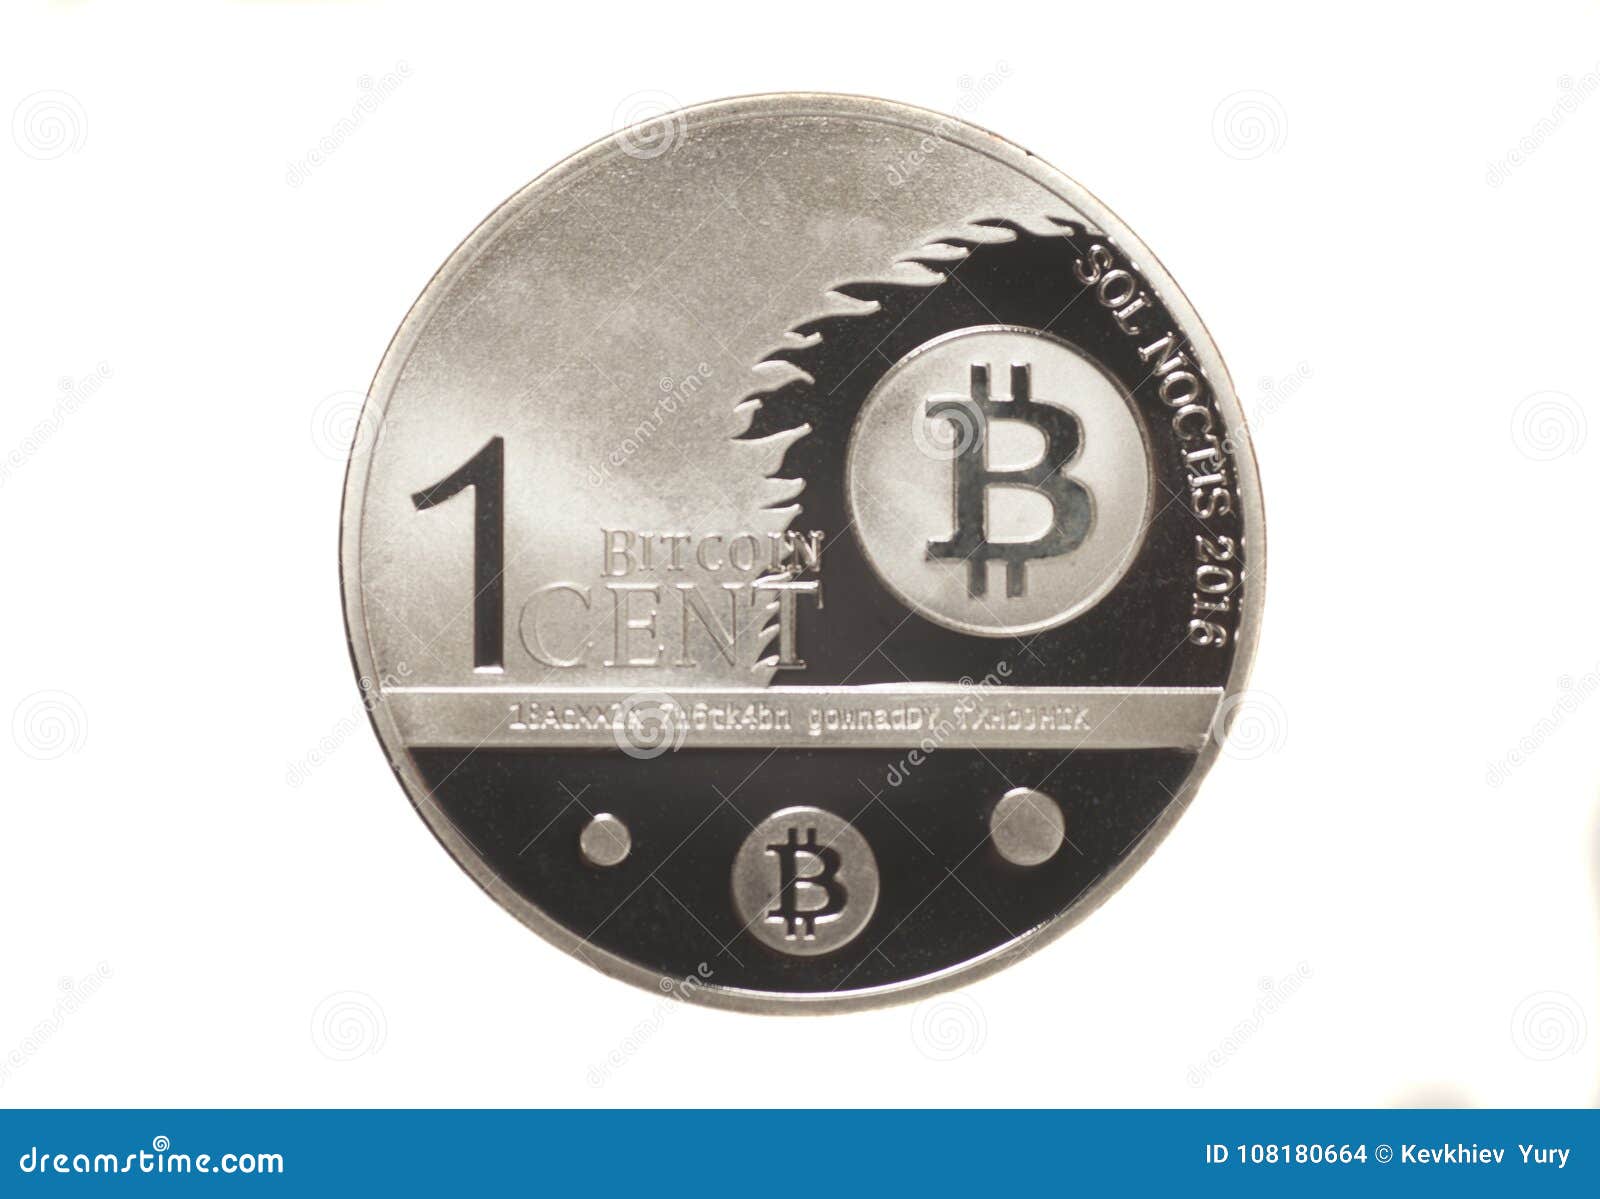 cent crypto coin